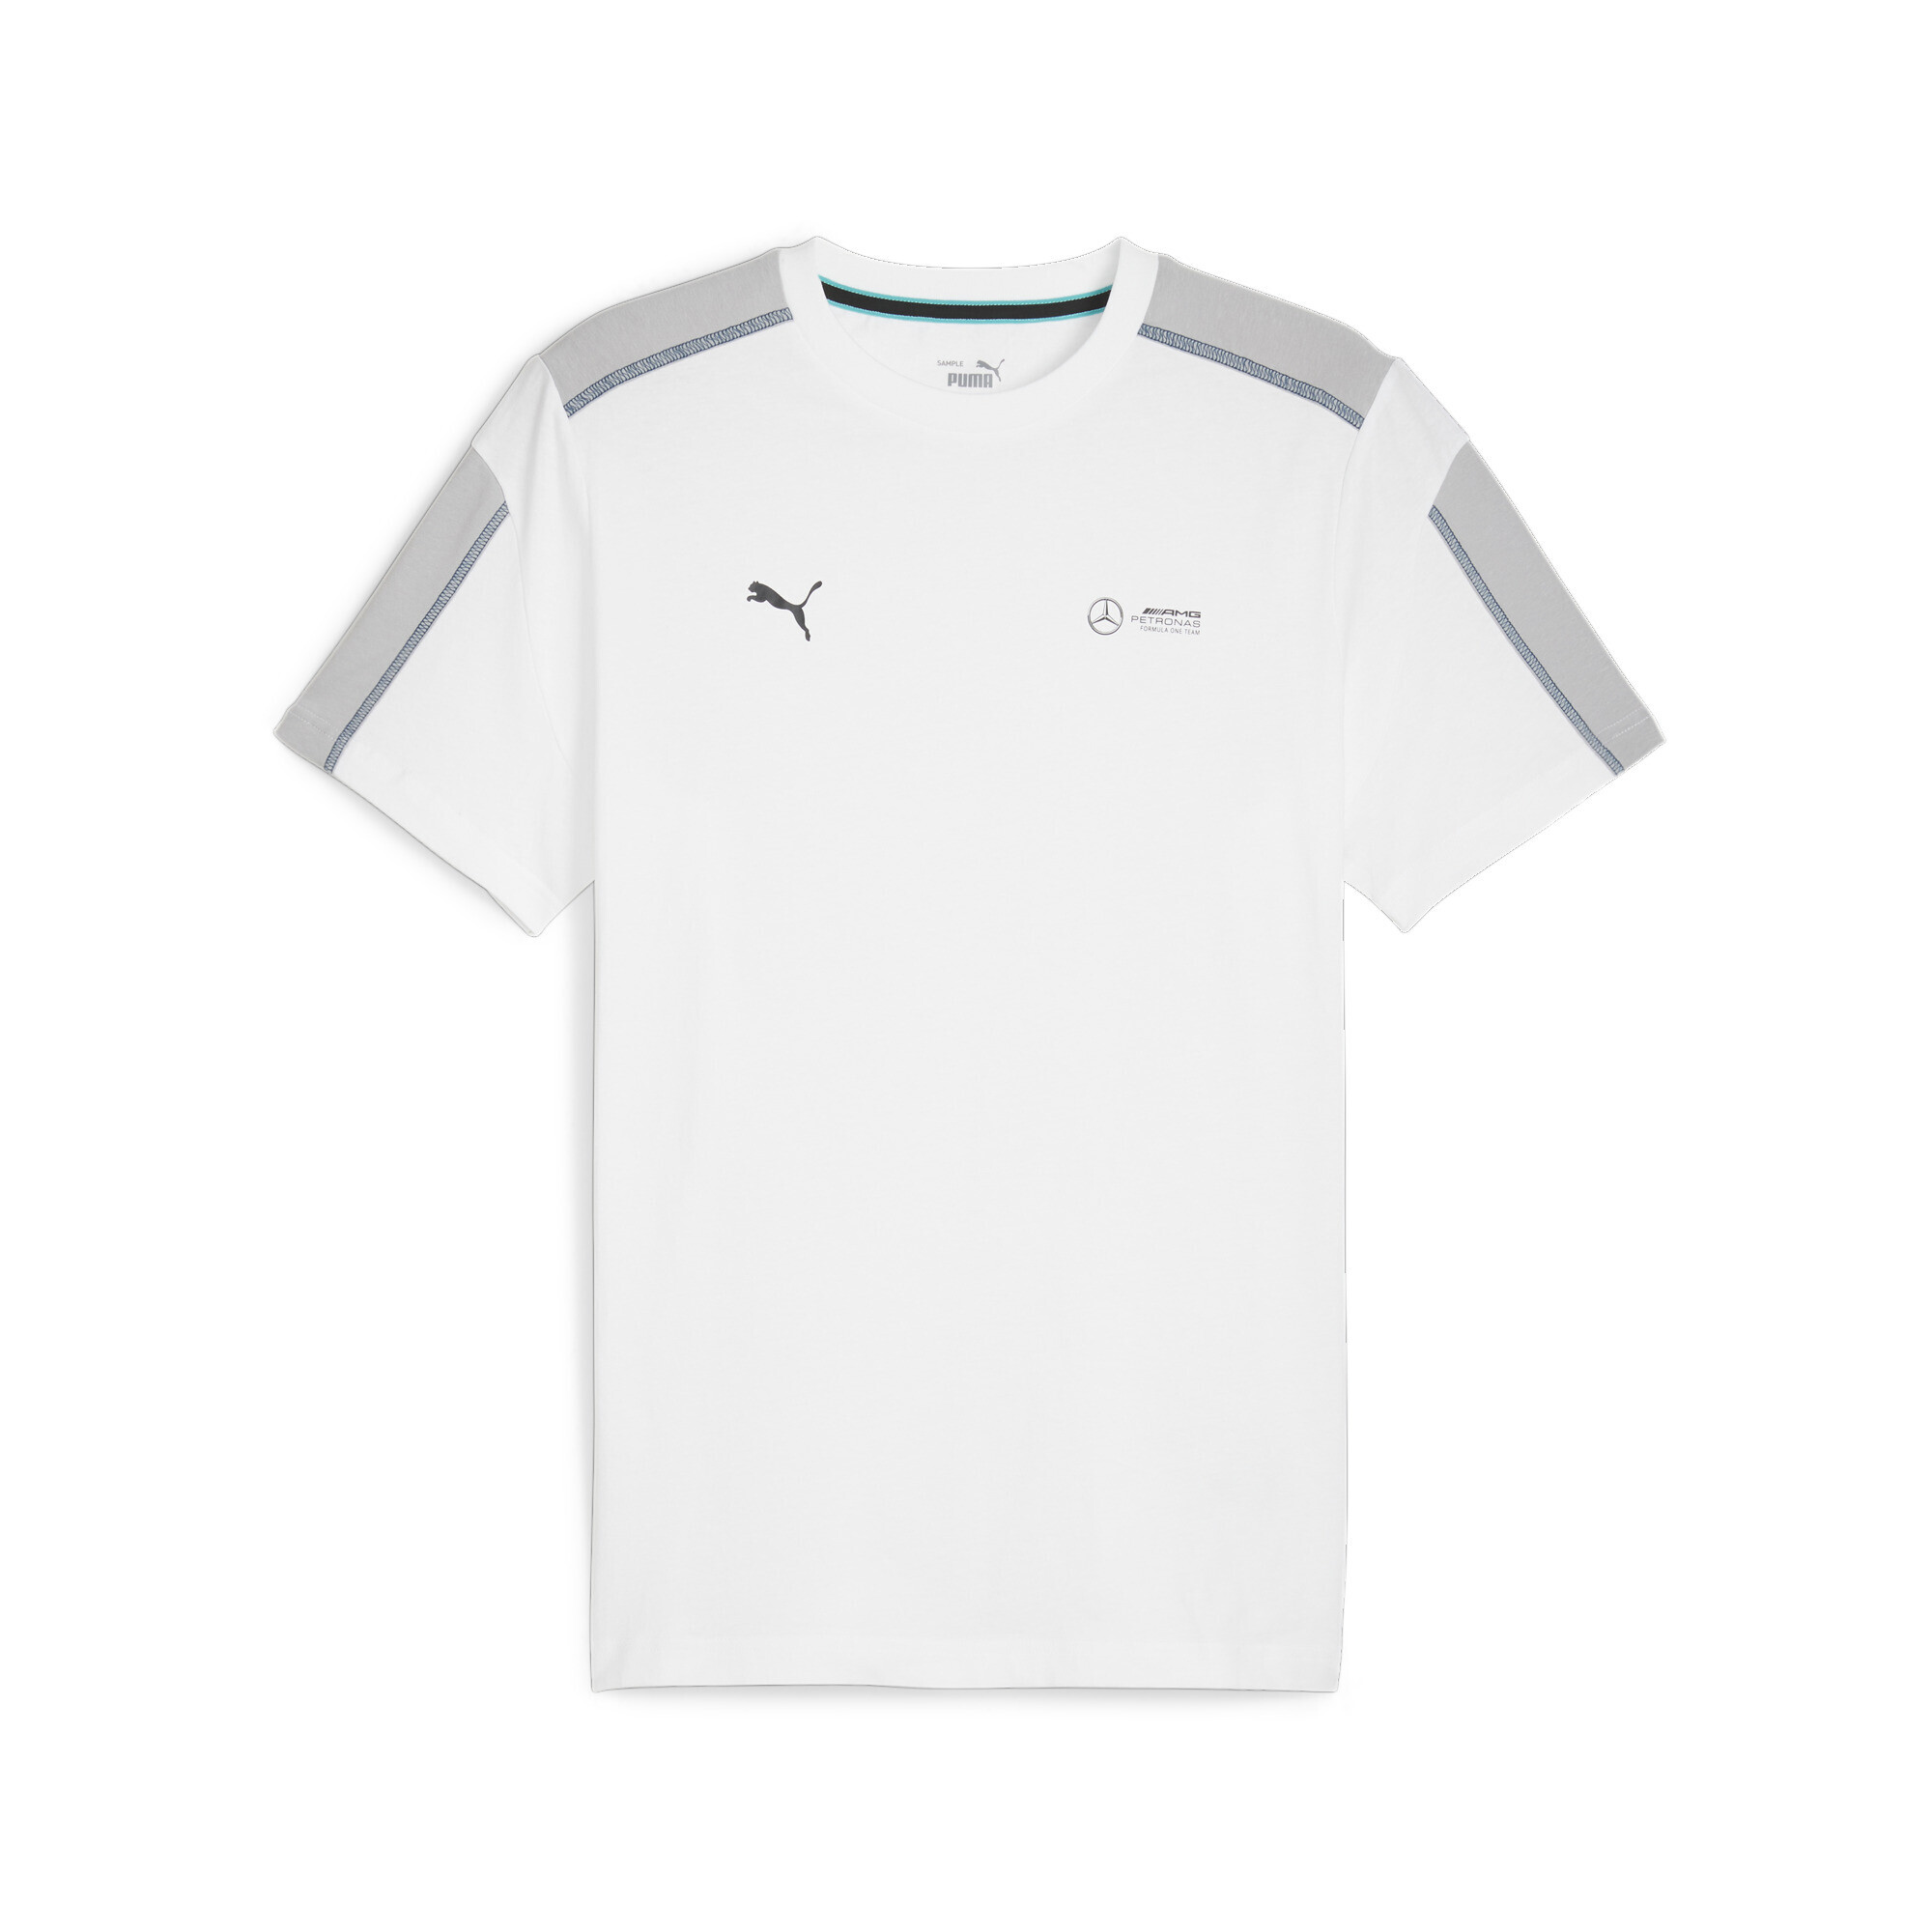 puma t-shirt mercedes amg blanc